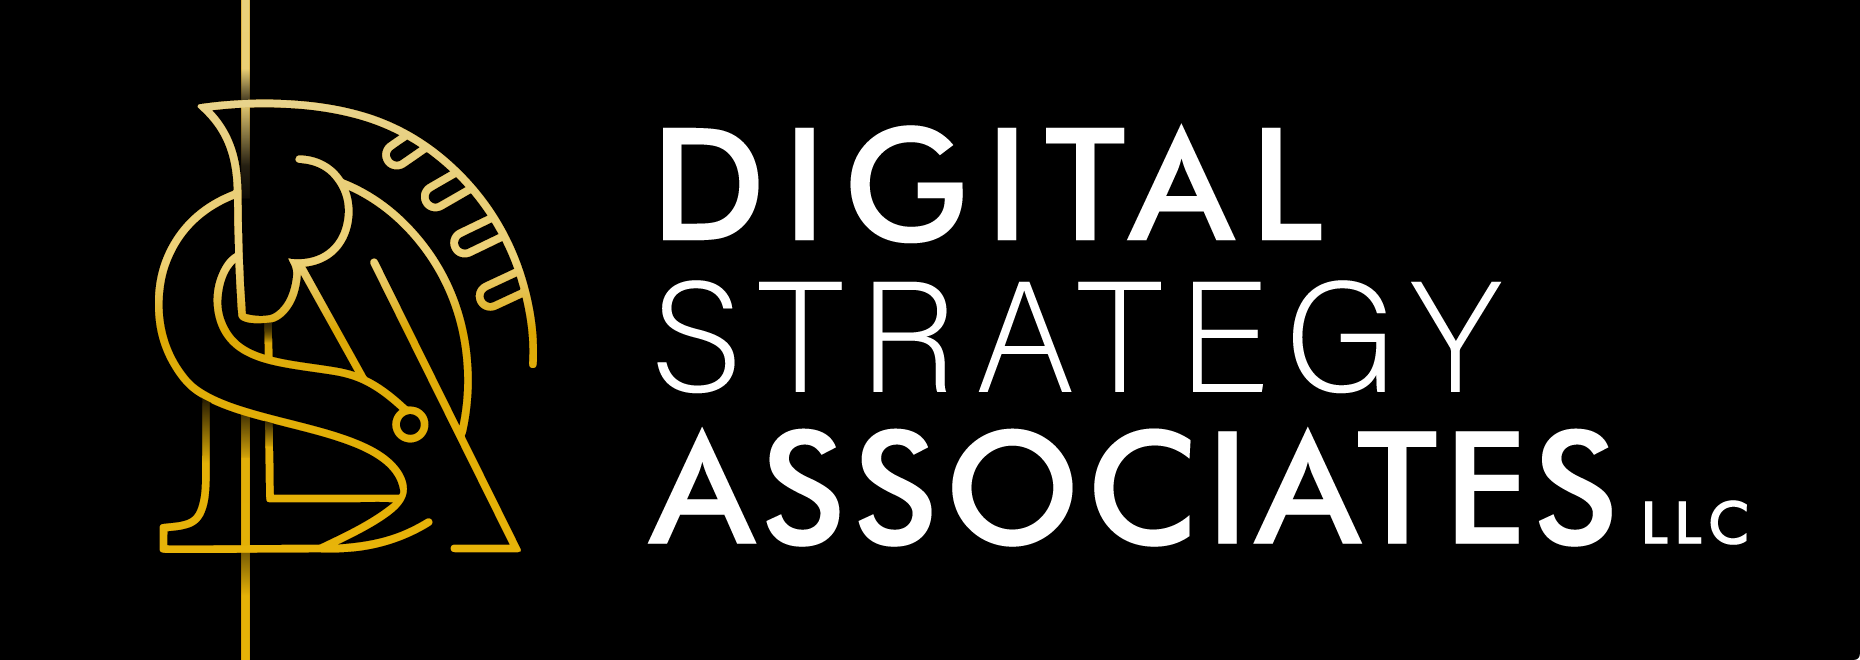 Digital Strategy Associates LLC